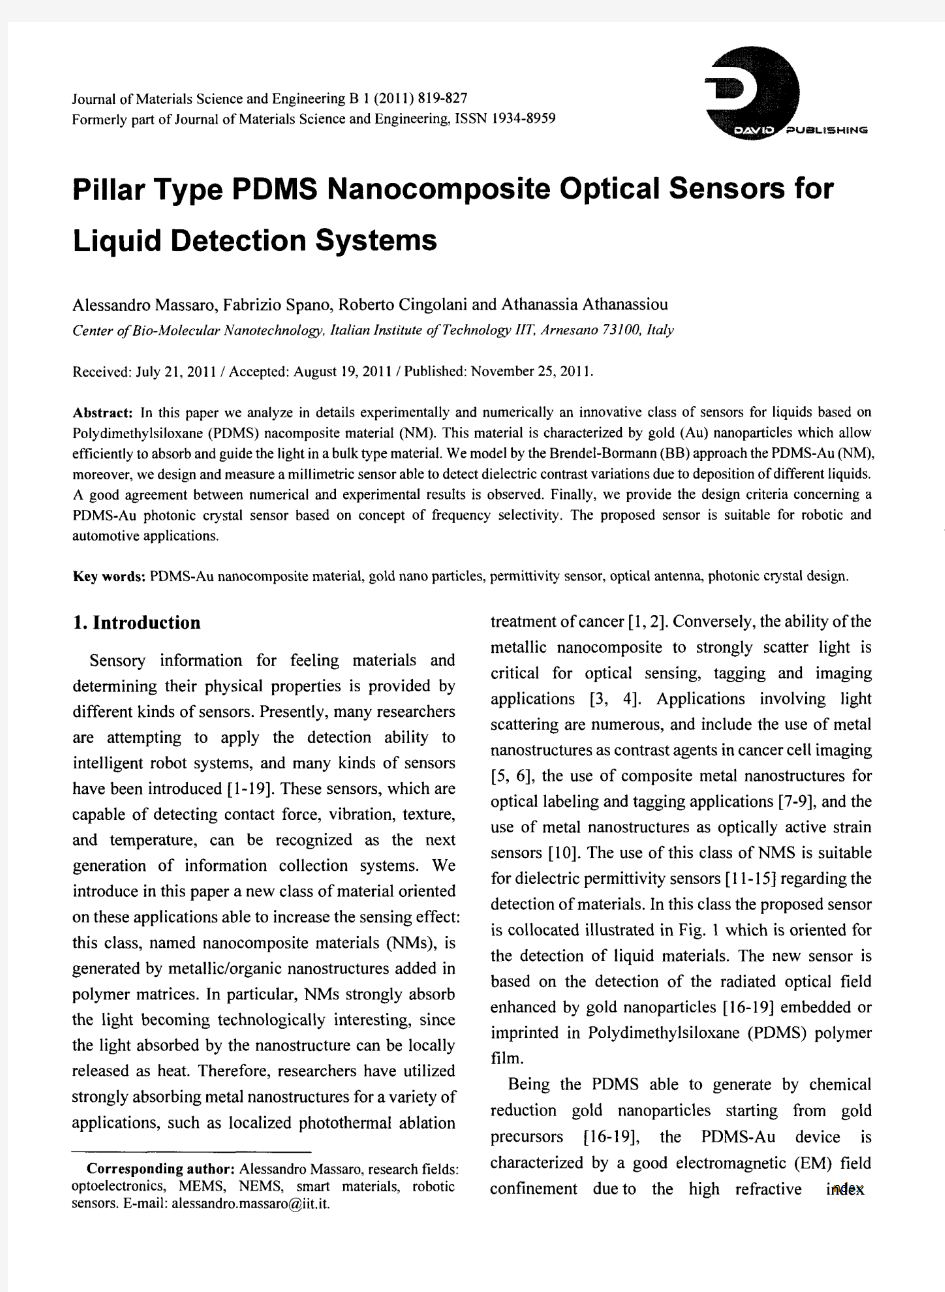 Pillar Type PDMS Nanocomposite Optical Sensors for Liquid Detection Systems